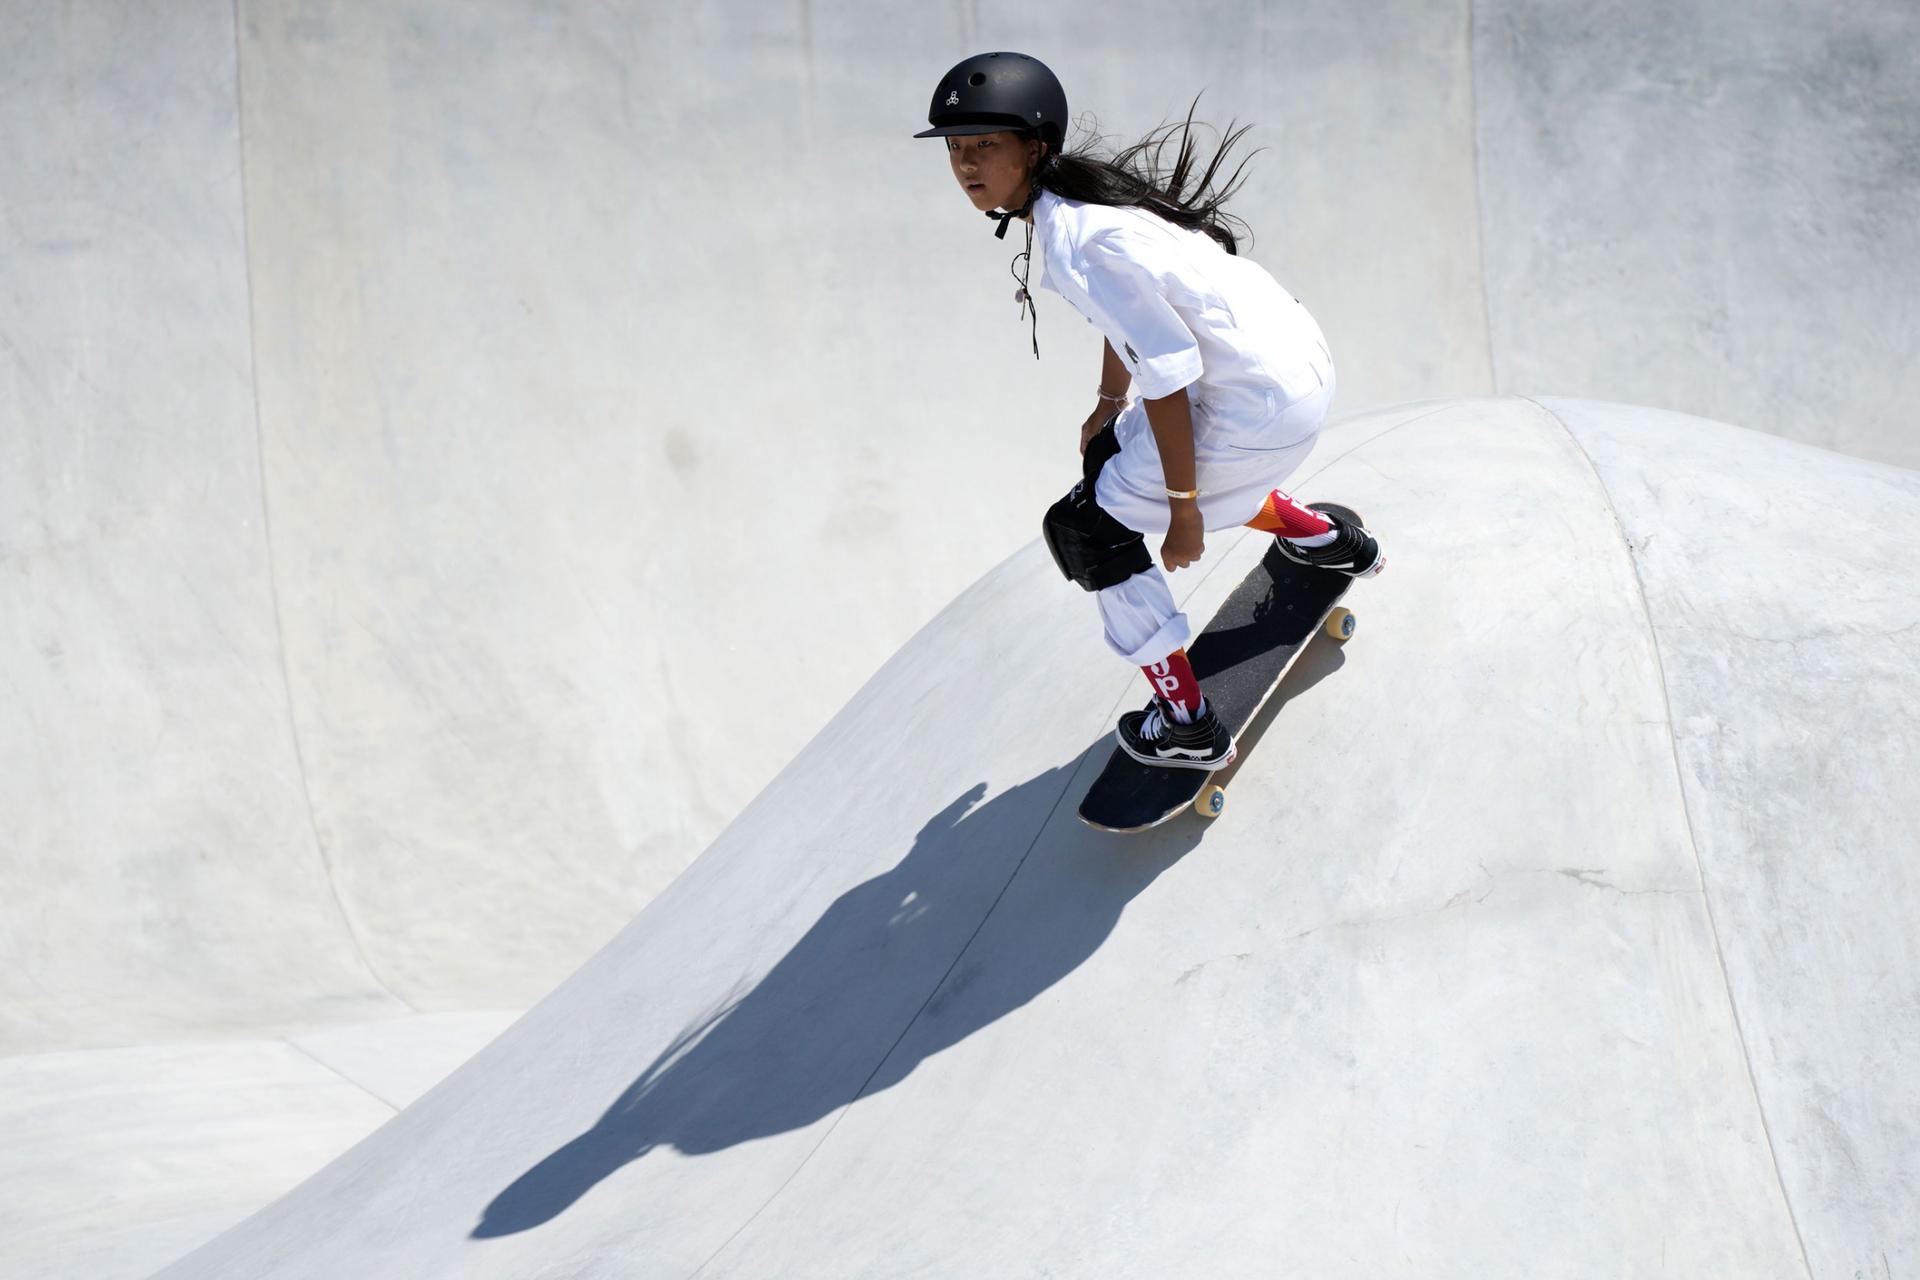 Kokona Hiraki is shown wearing all white and black knee pads while riding a skateboard.